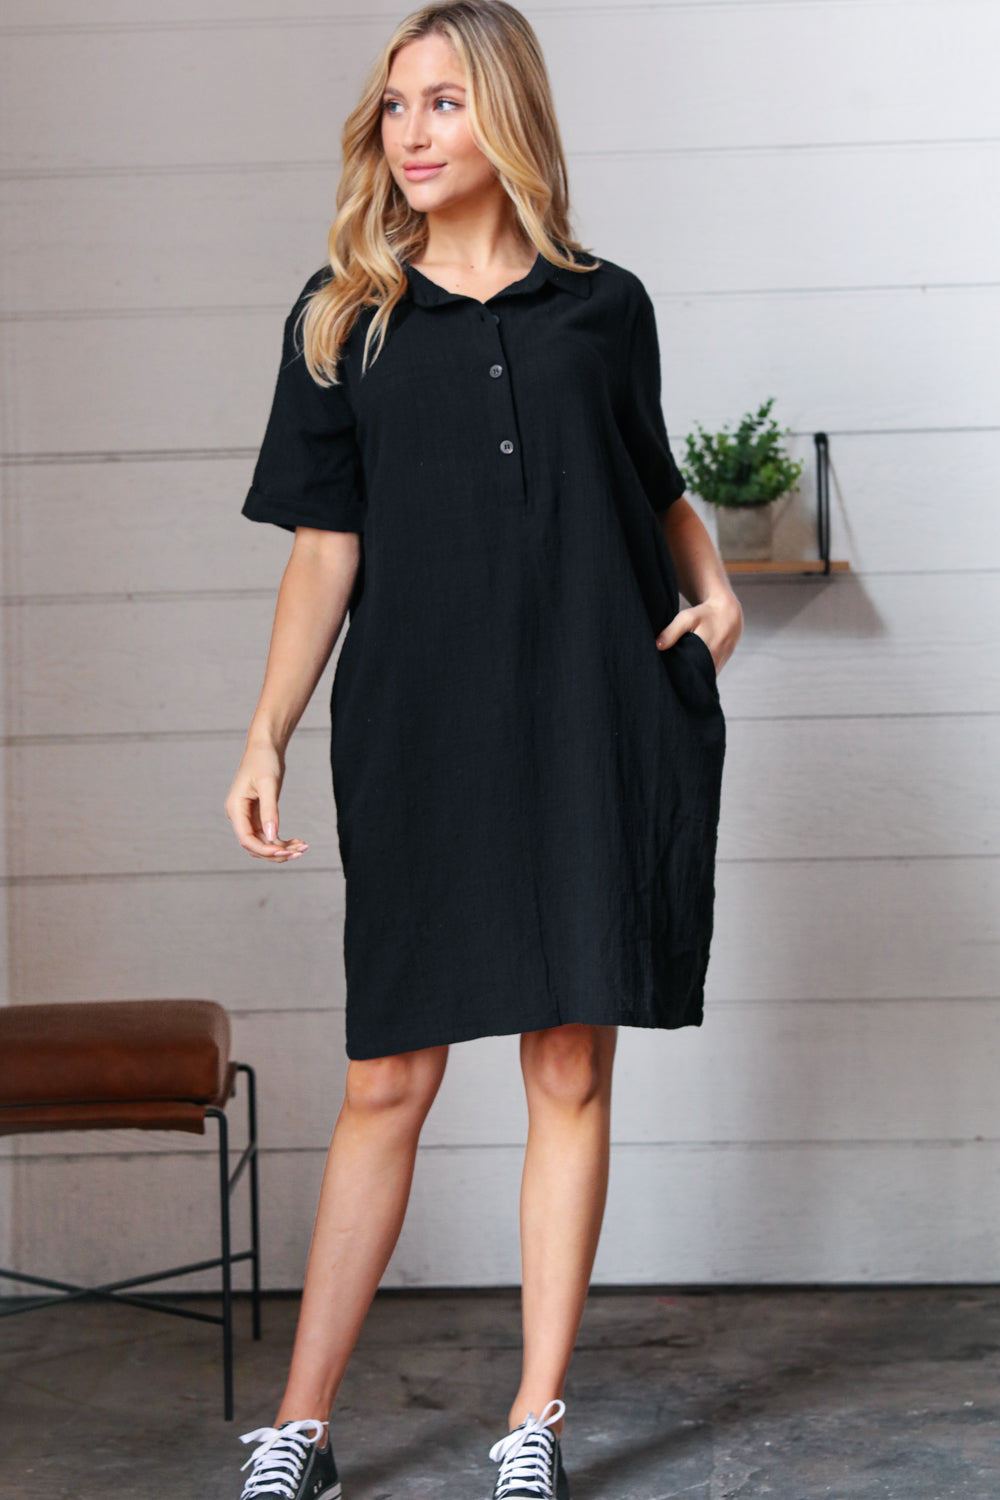 black button up dress, modest dresses, affordable modest clothing